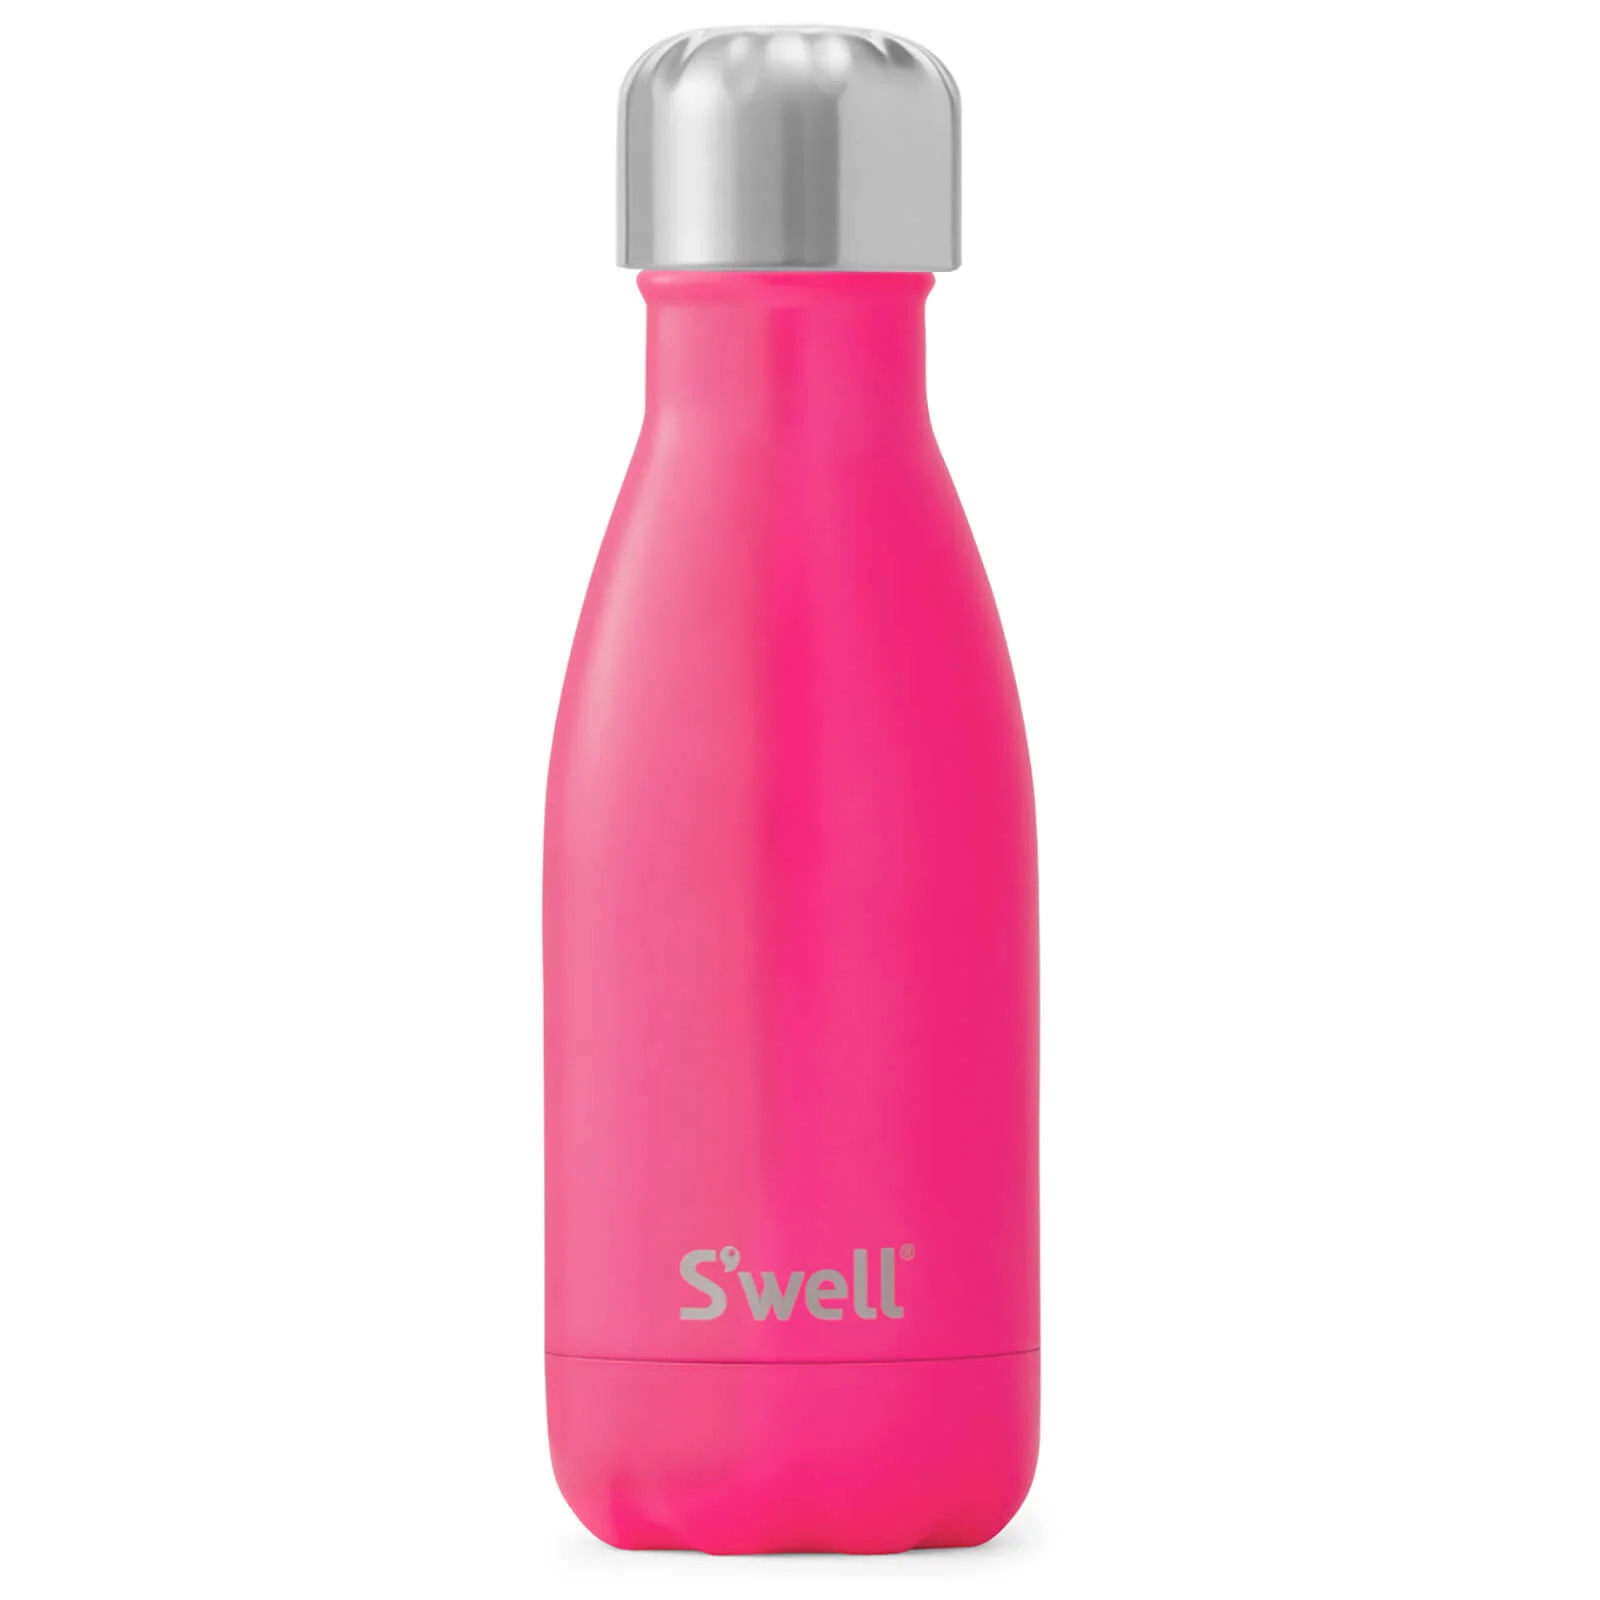 S'well The Bikini Pink Water Bottle 260ml Image 1